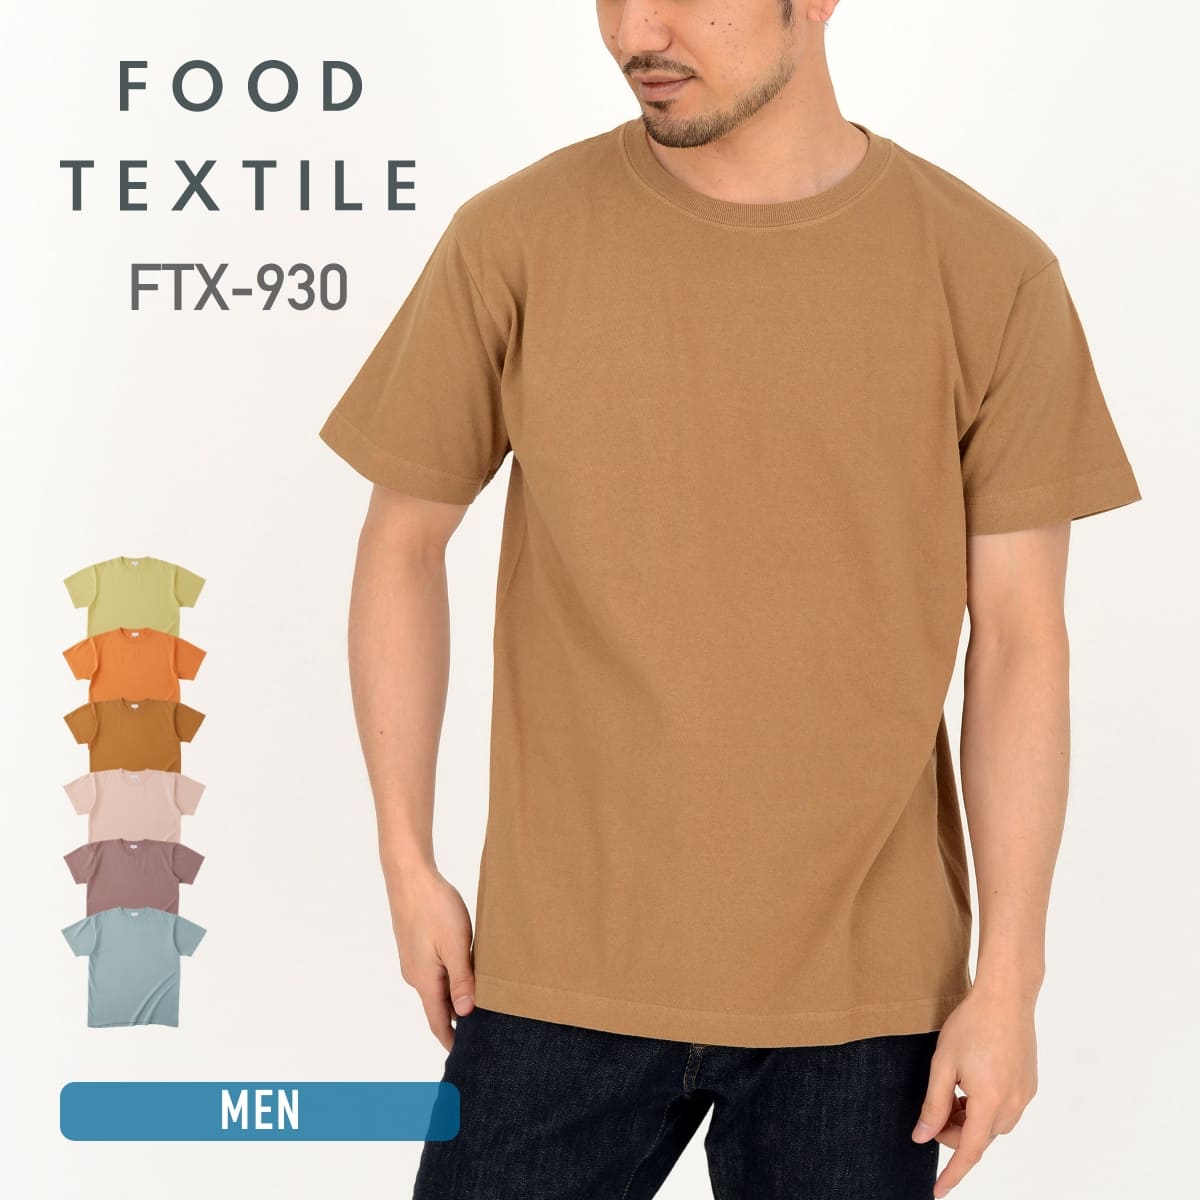 tシャツ メンズ 半袖 無地 6.2オンス フードテキスタイル Tシャツ FTX-930 フードロス 天然染料 男女兼用 食品廃棄物 再活用 プロジェクト